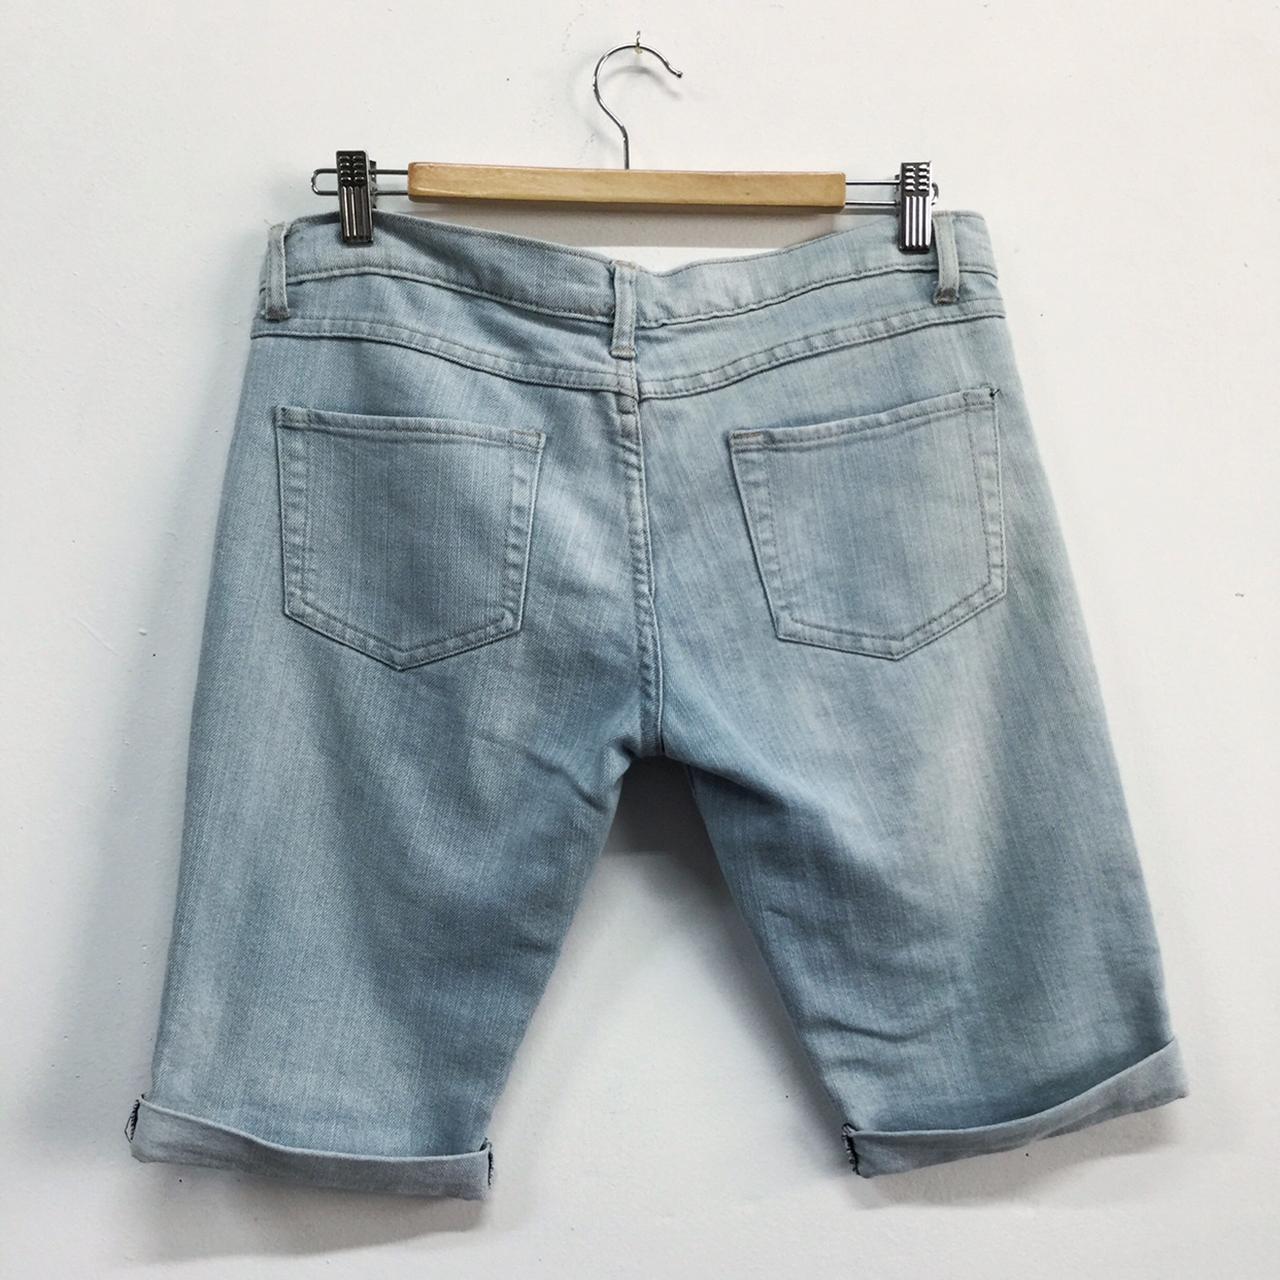 Vintage 90's Style Knee Length Denim Shorts - Size 12